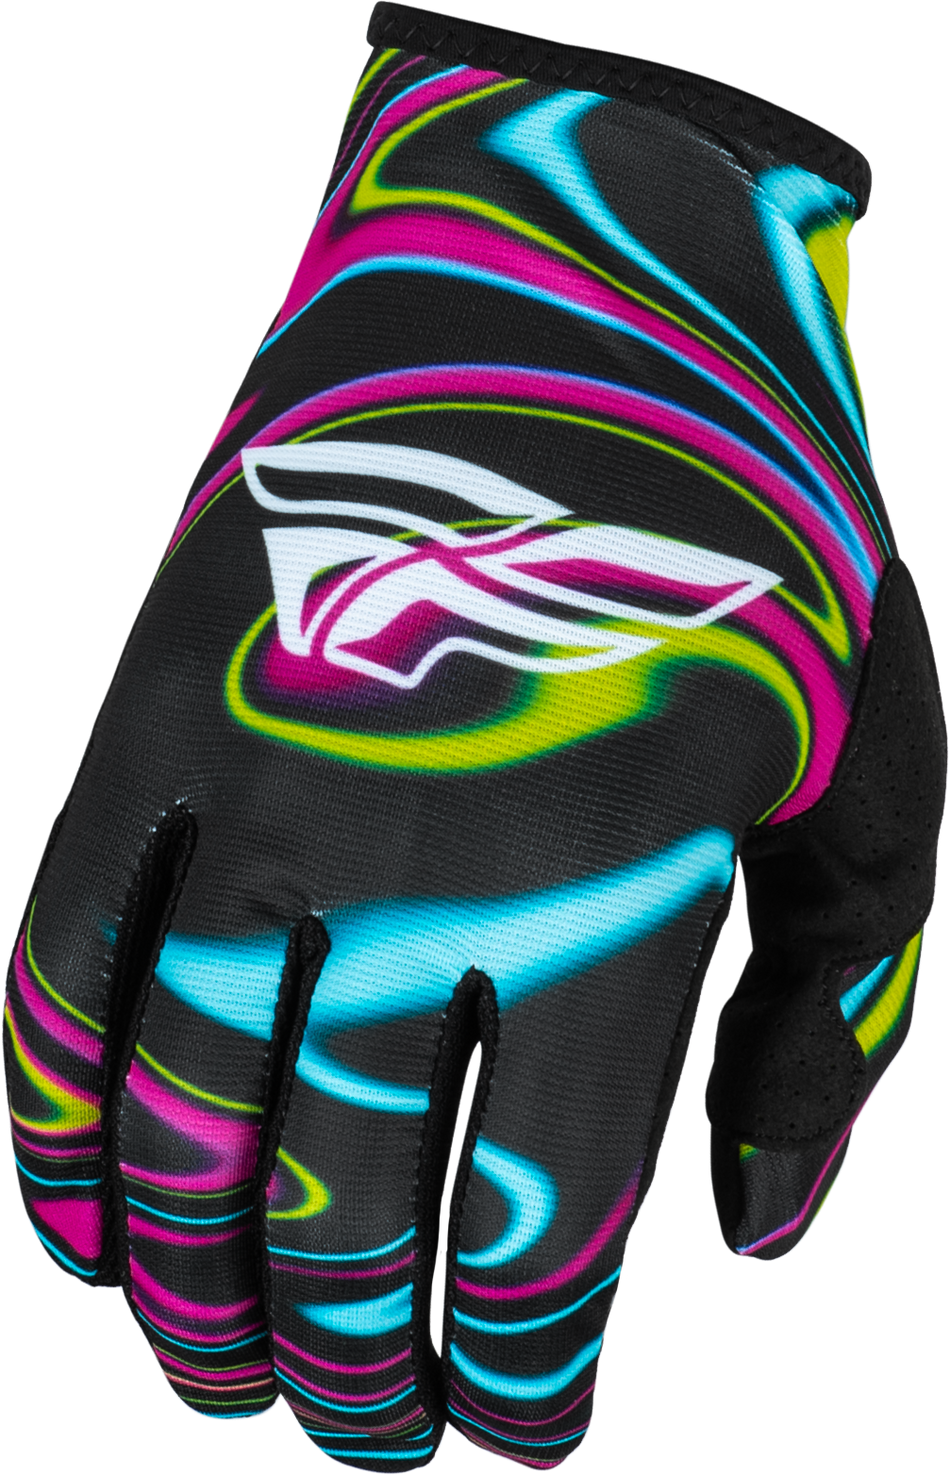 FLY RACING Lite Warped Gloves Black/Pink/Electric Blue Md 377-743M